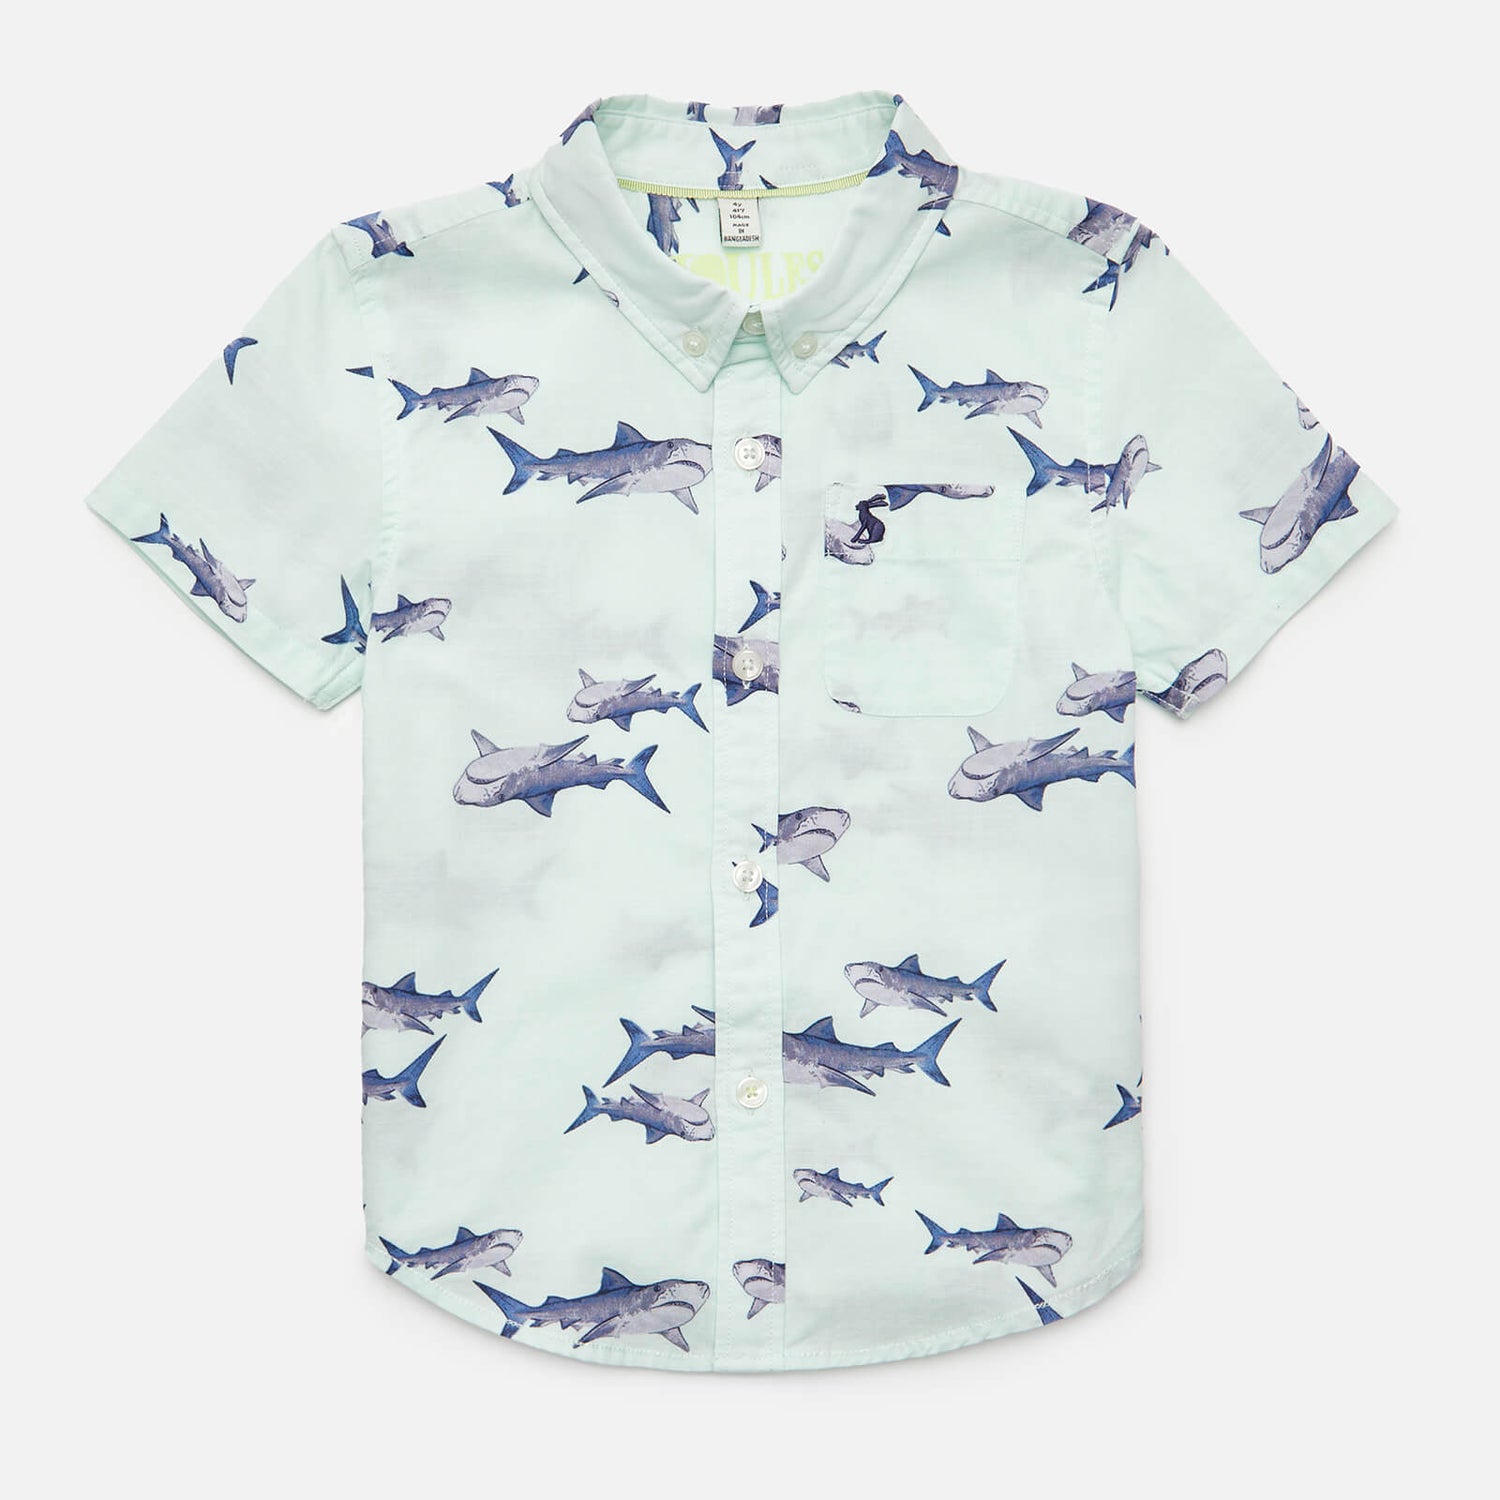 Joules Boys' Sefton Shirt - Green Sharks